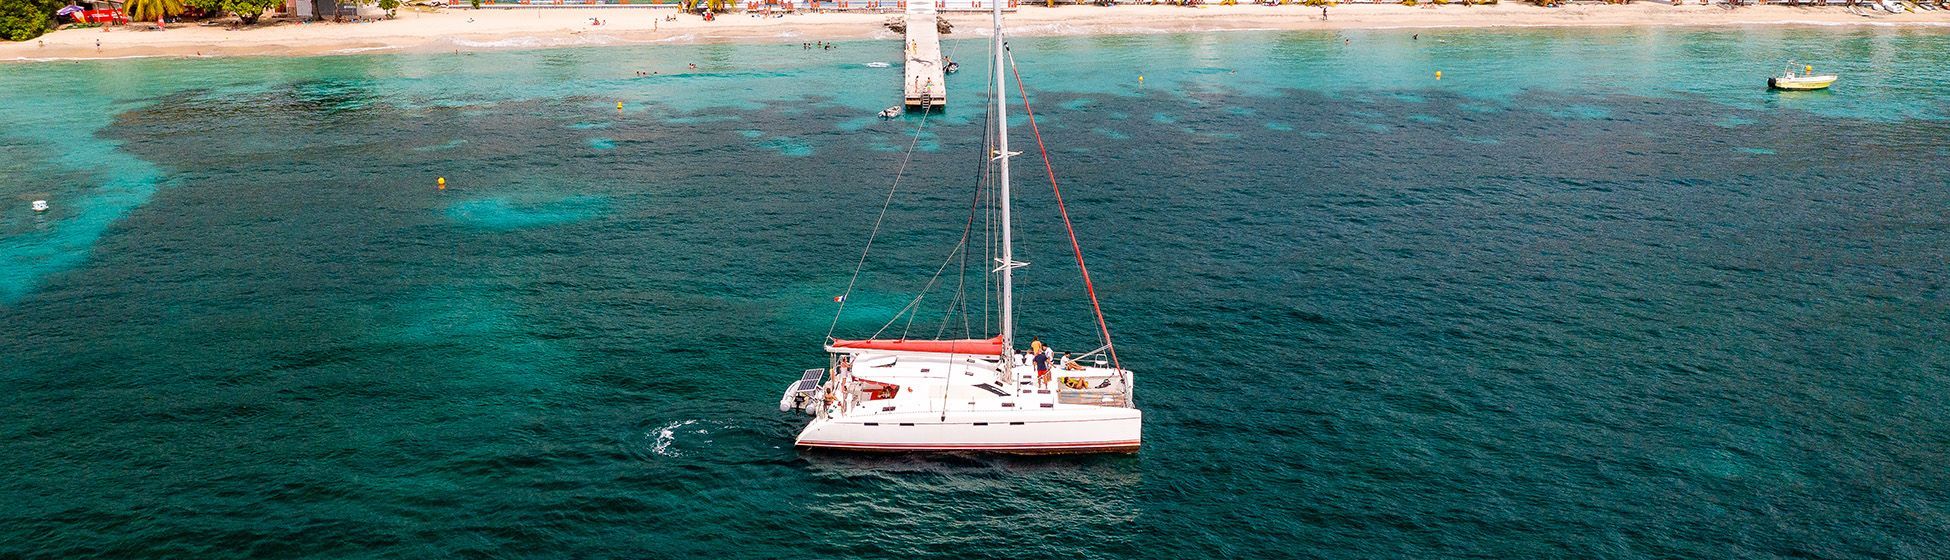 Location catamaran martinique sans skipper